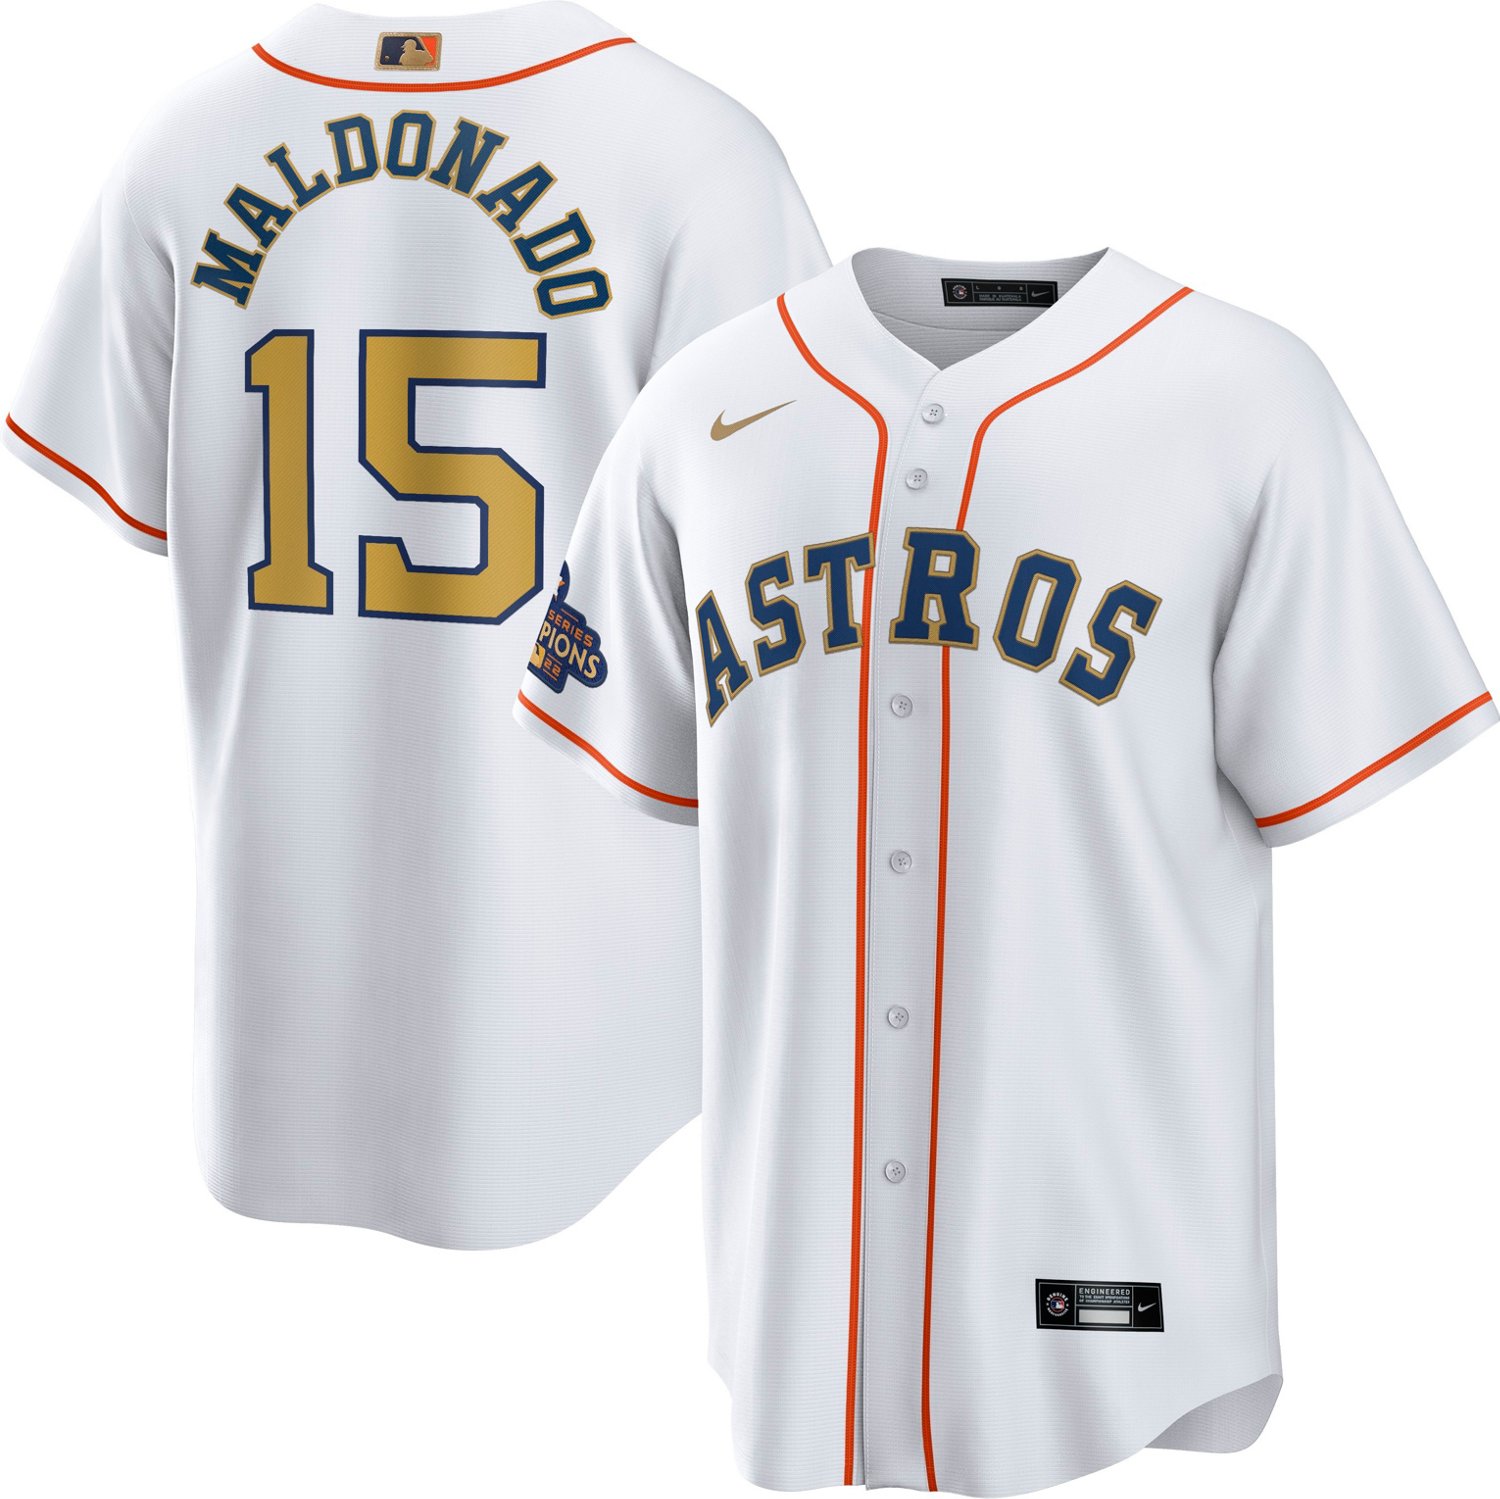 Official Martin Maldonado Houston Astros Jerseys, Astros Martin Maldonado  Baseball Jerseys, Uniforms